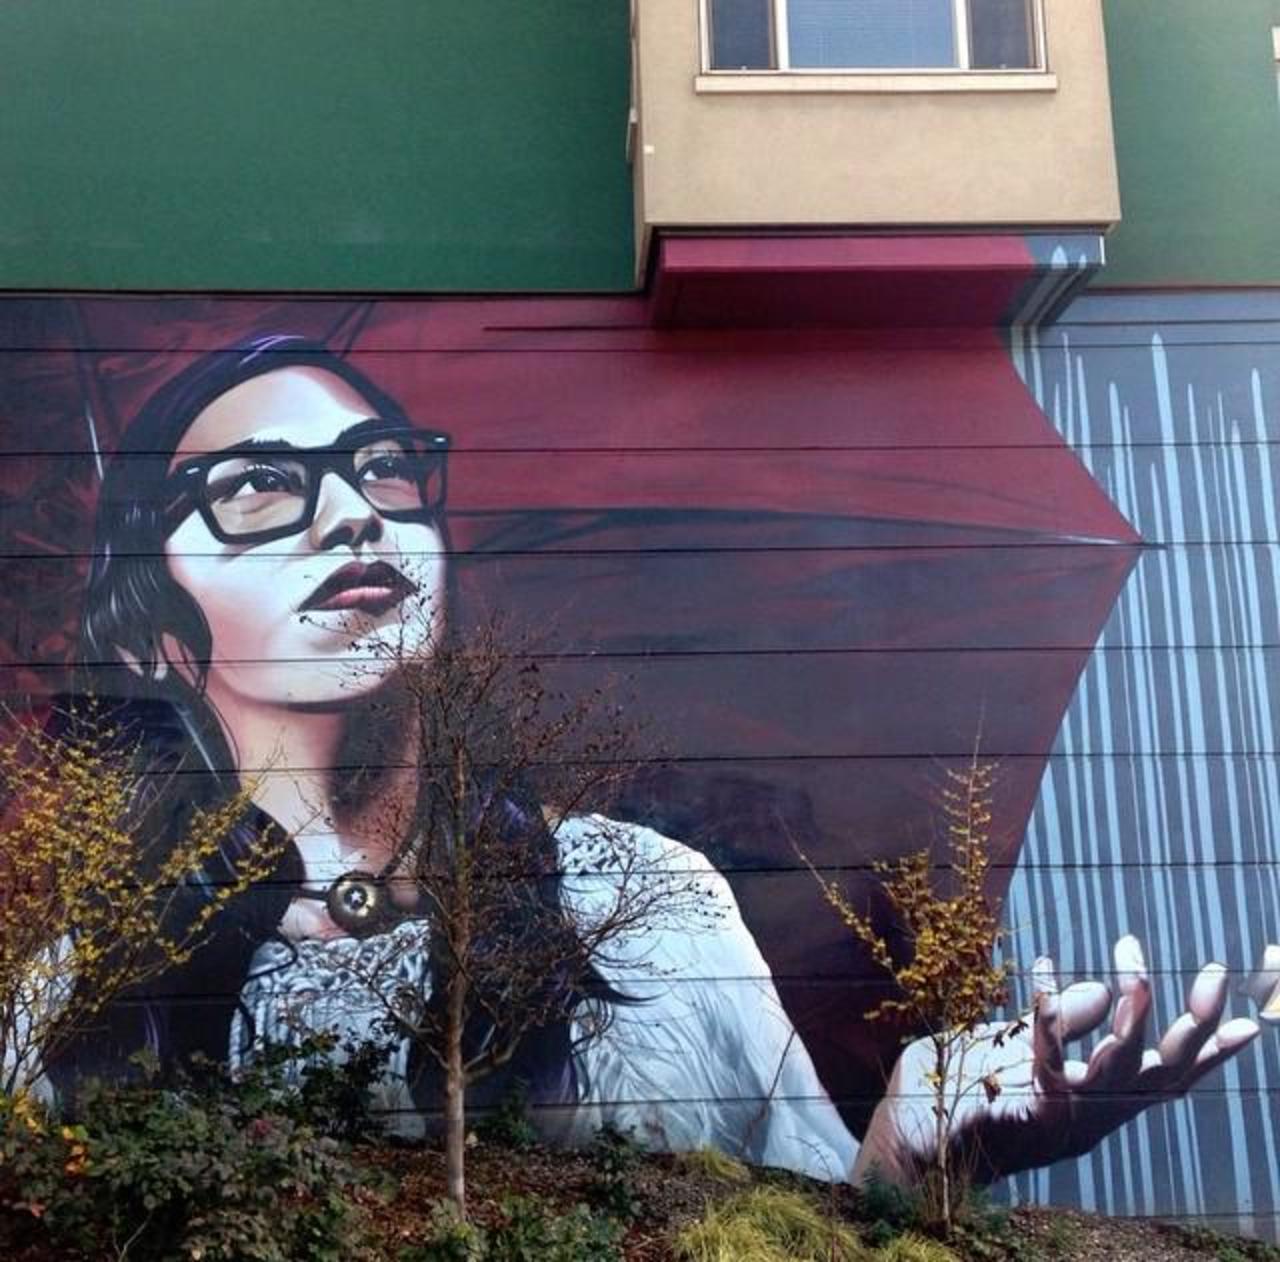 Artist Eras MFK Street Art piece in Capitol Hill, Seattle

#art #mural #graffiti #streetart http://t.co/2whoSrcjYV